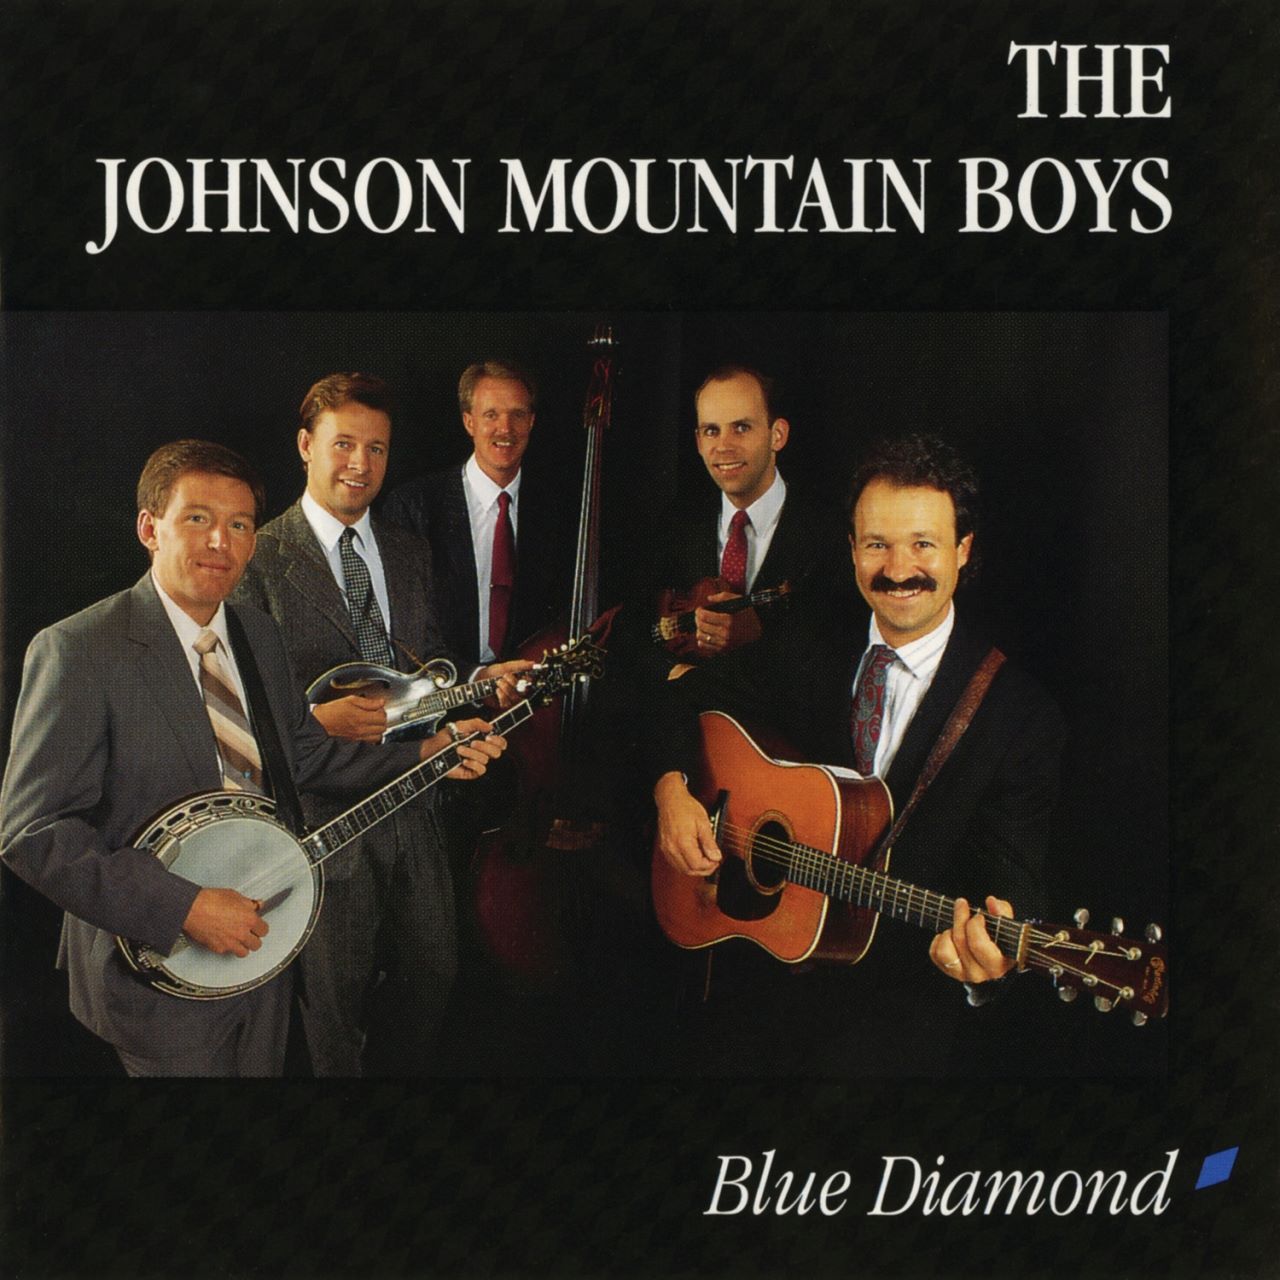 Johnson Mountain Boys - Blue Diamond cover album